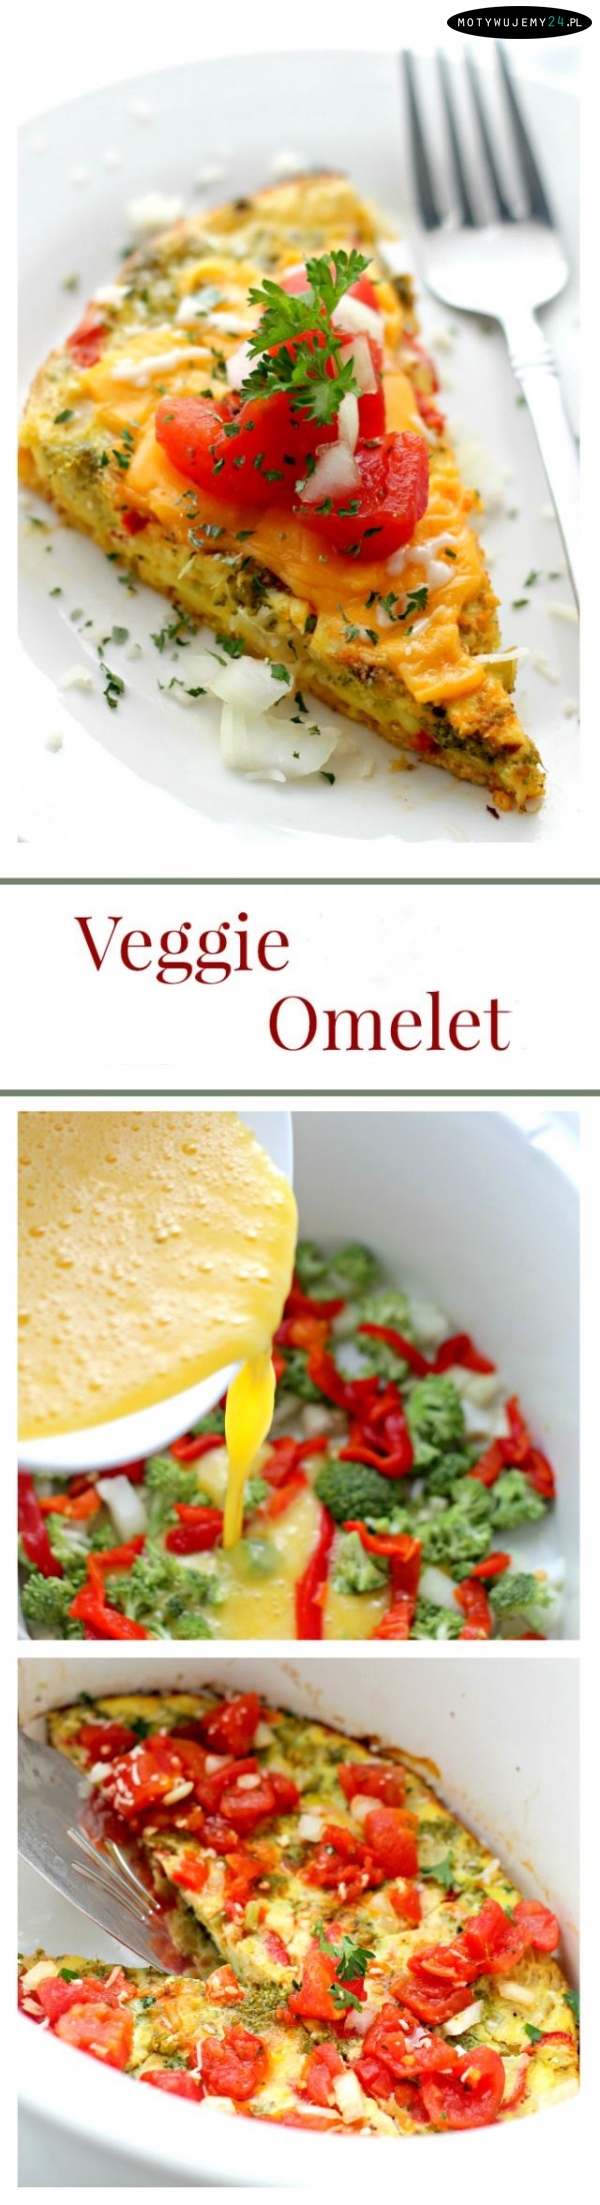 Omlet warzywny